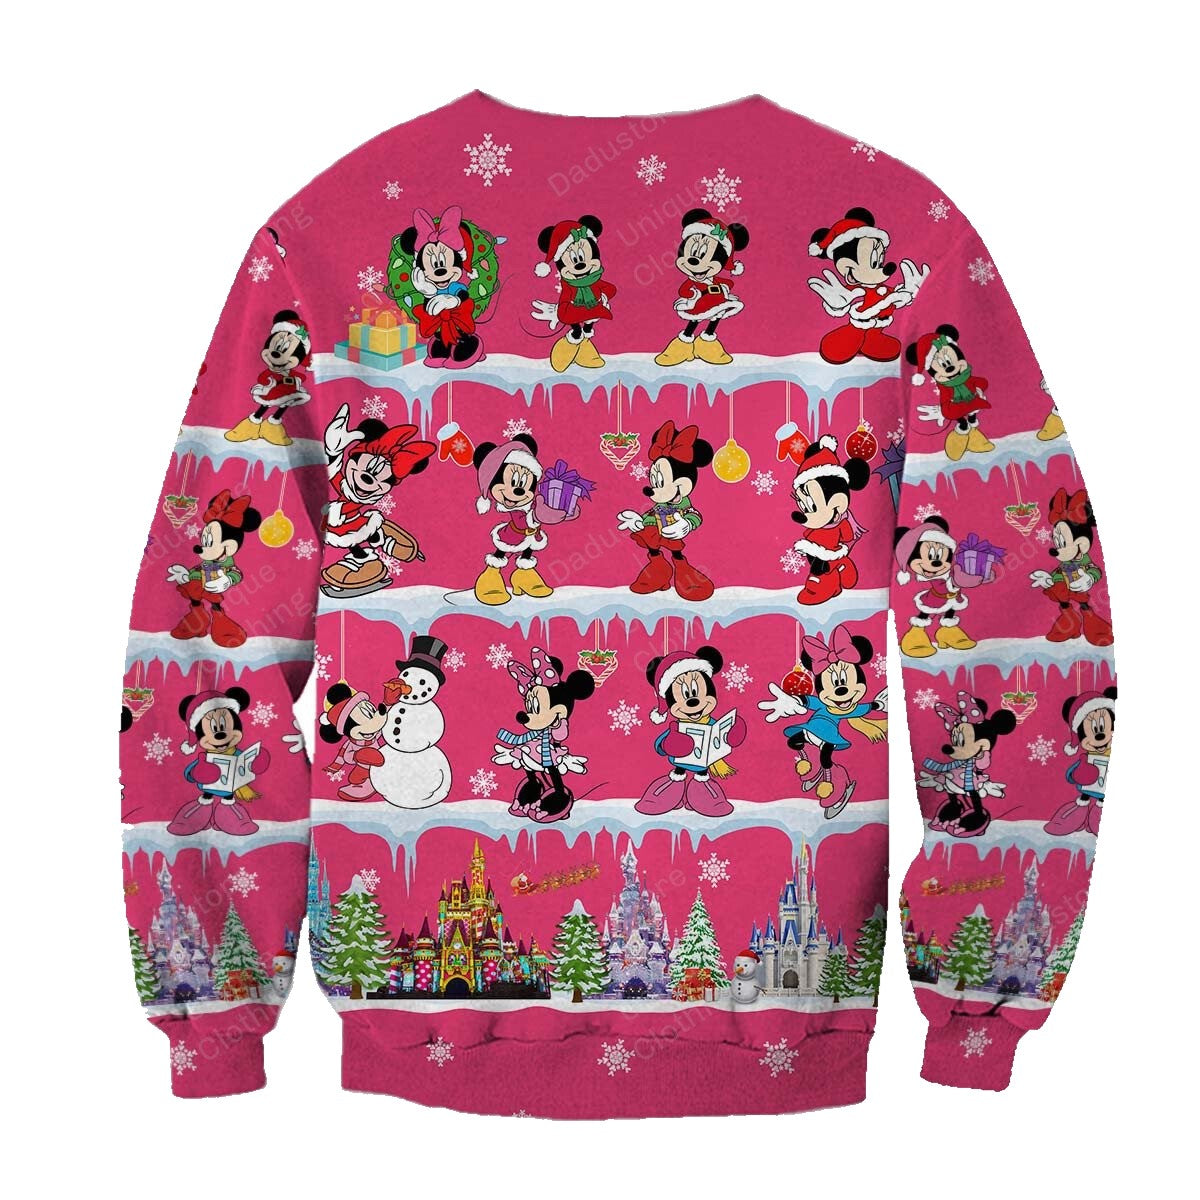 DN Sweatshirt Christmas Celebration Minnie Sweatshirt Pink Unisex Adults New Release